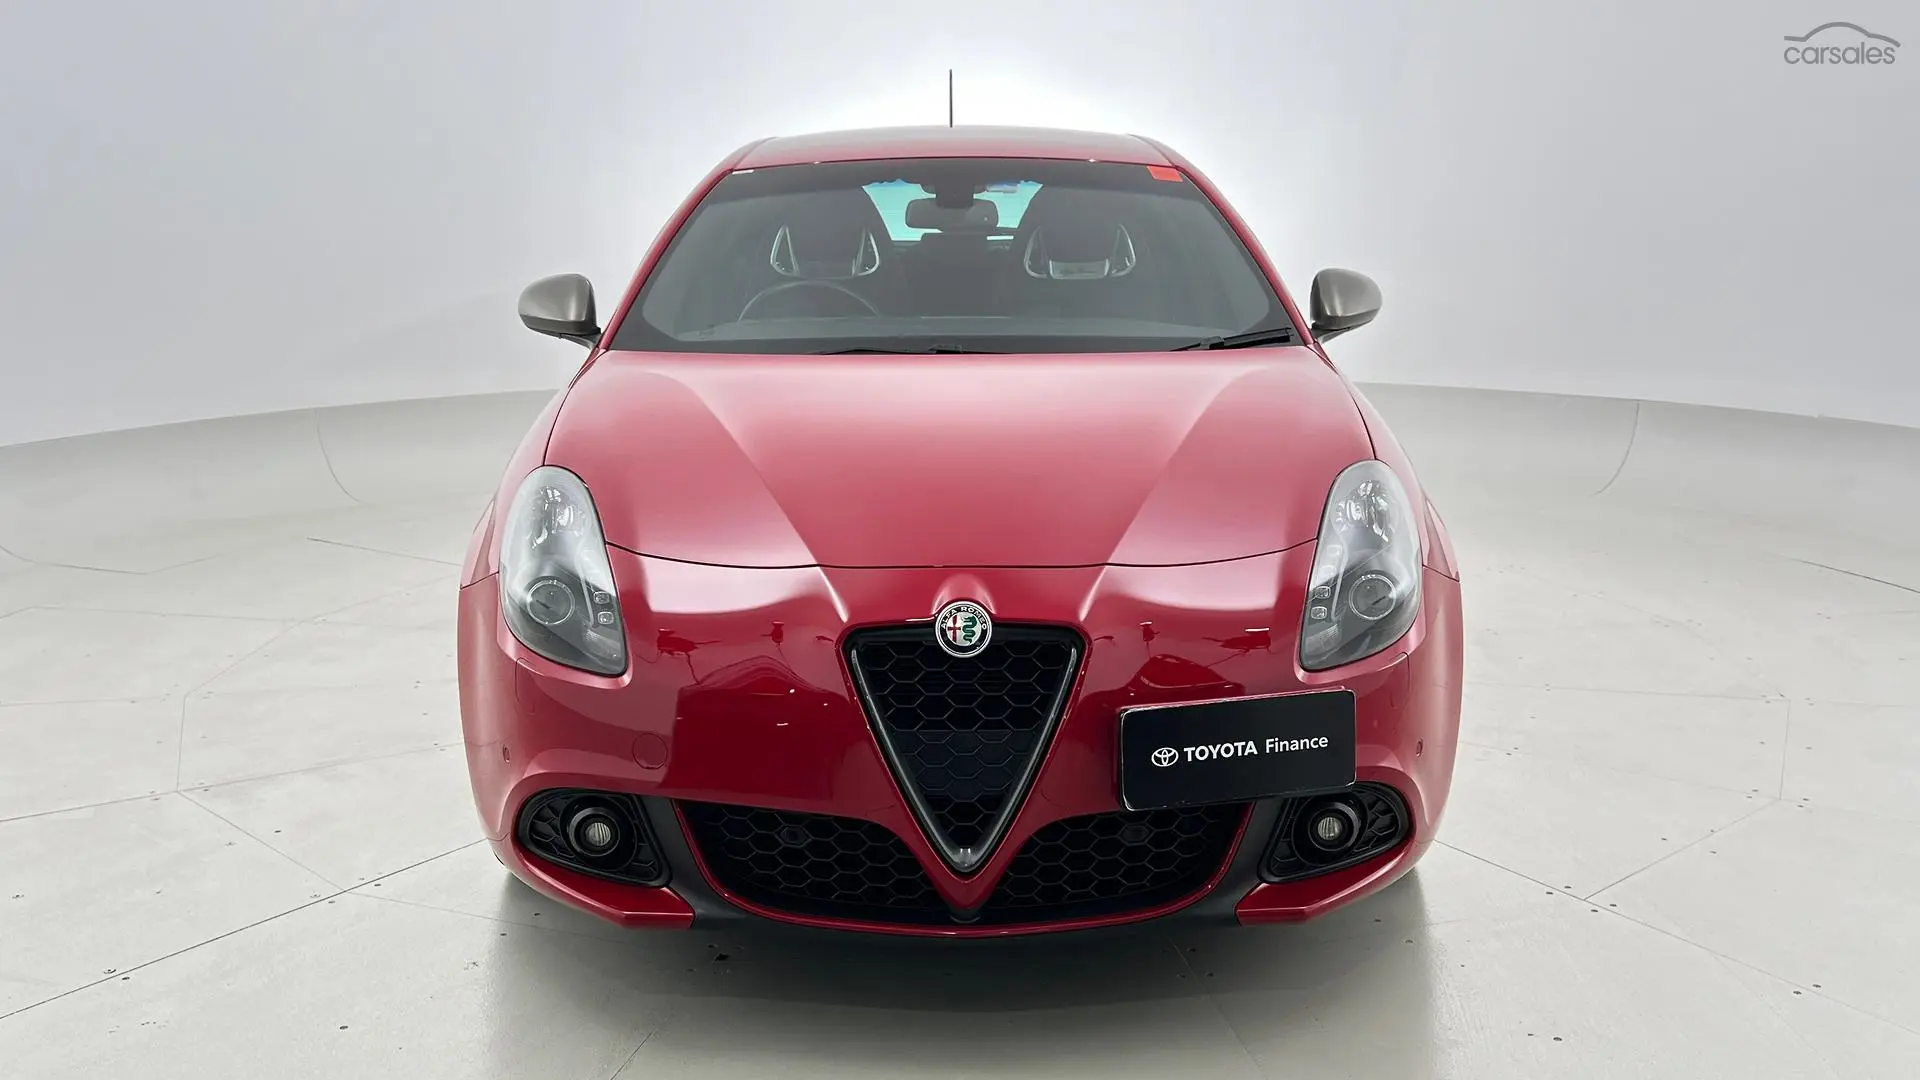 2018 Alfa Romeo Giulietta Image 2